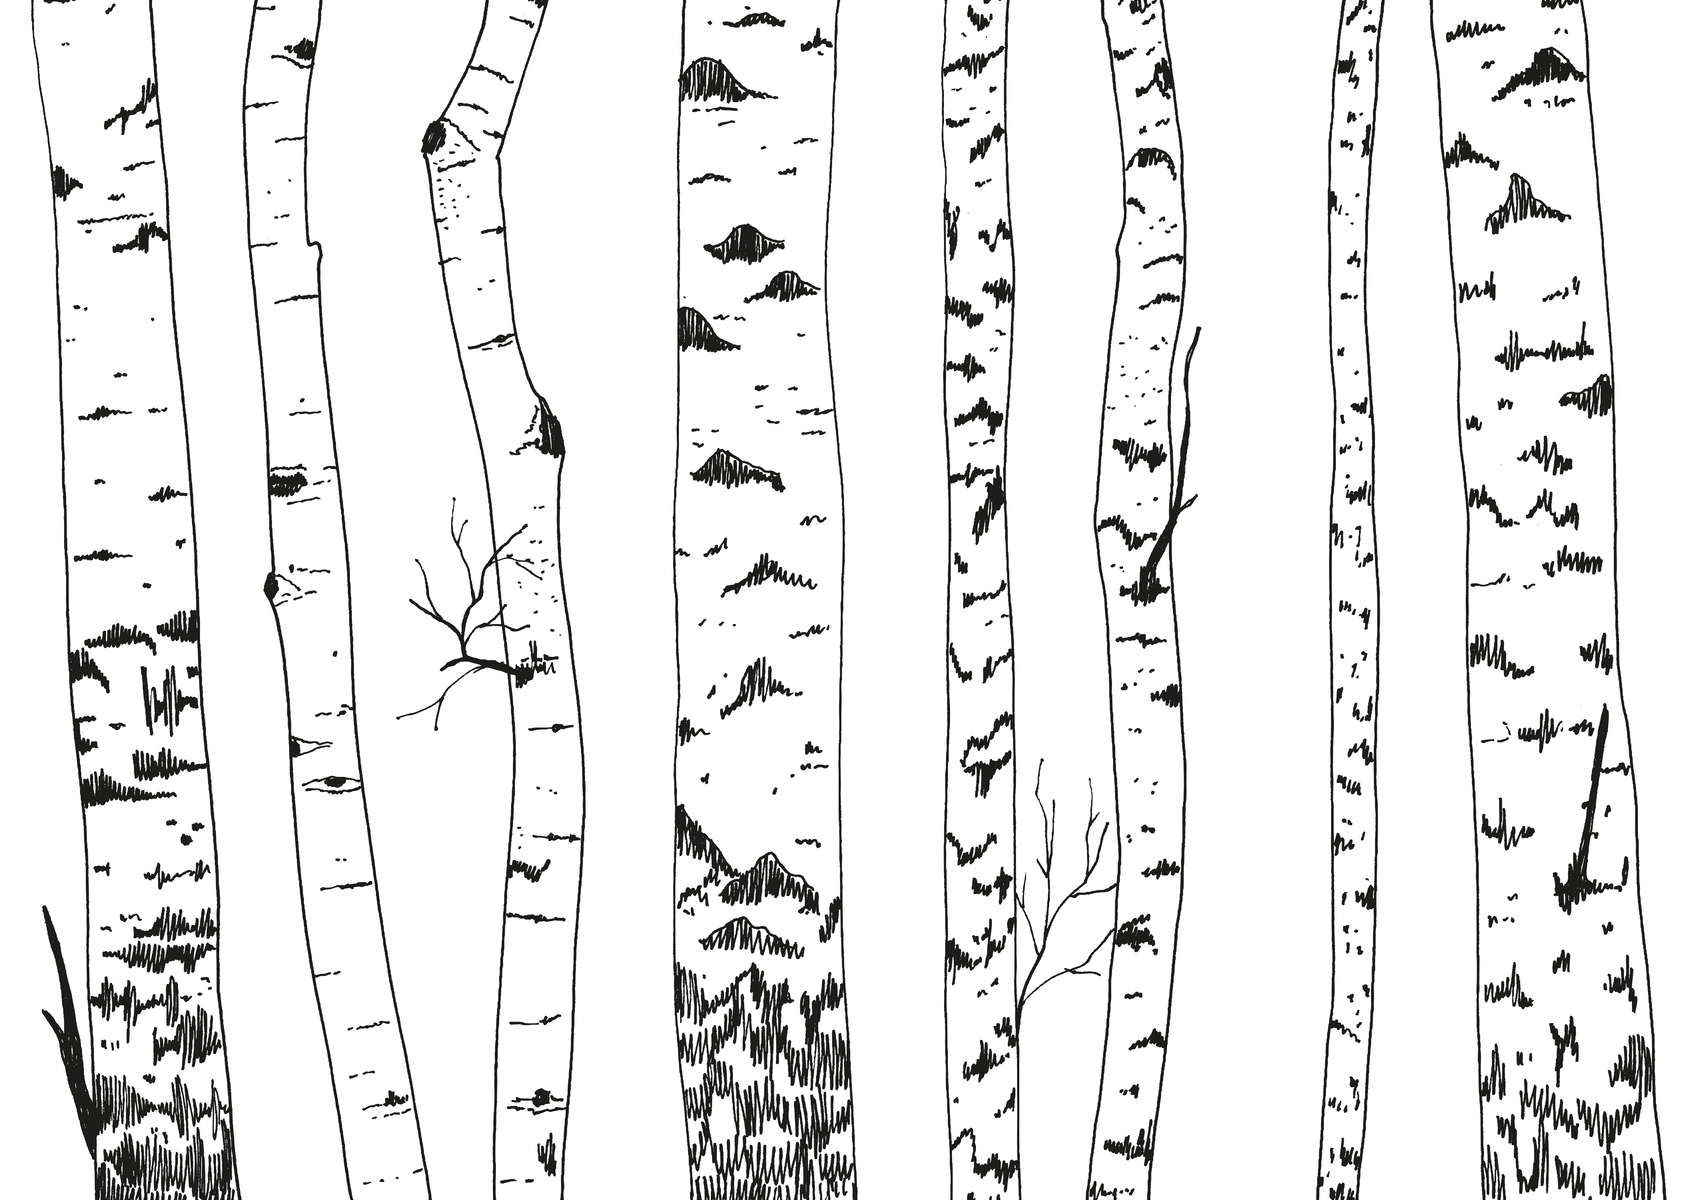             Fotomurali disegnato sulla foresta di betulle - tessuto non tessuto liscio e leggermente lucido
        